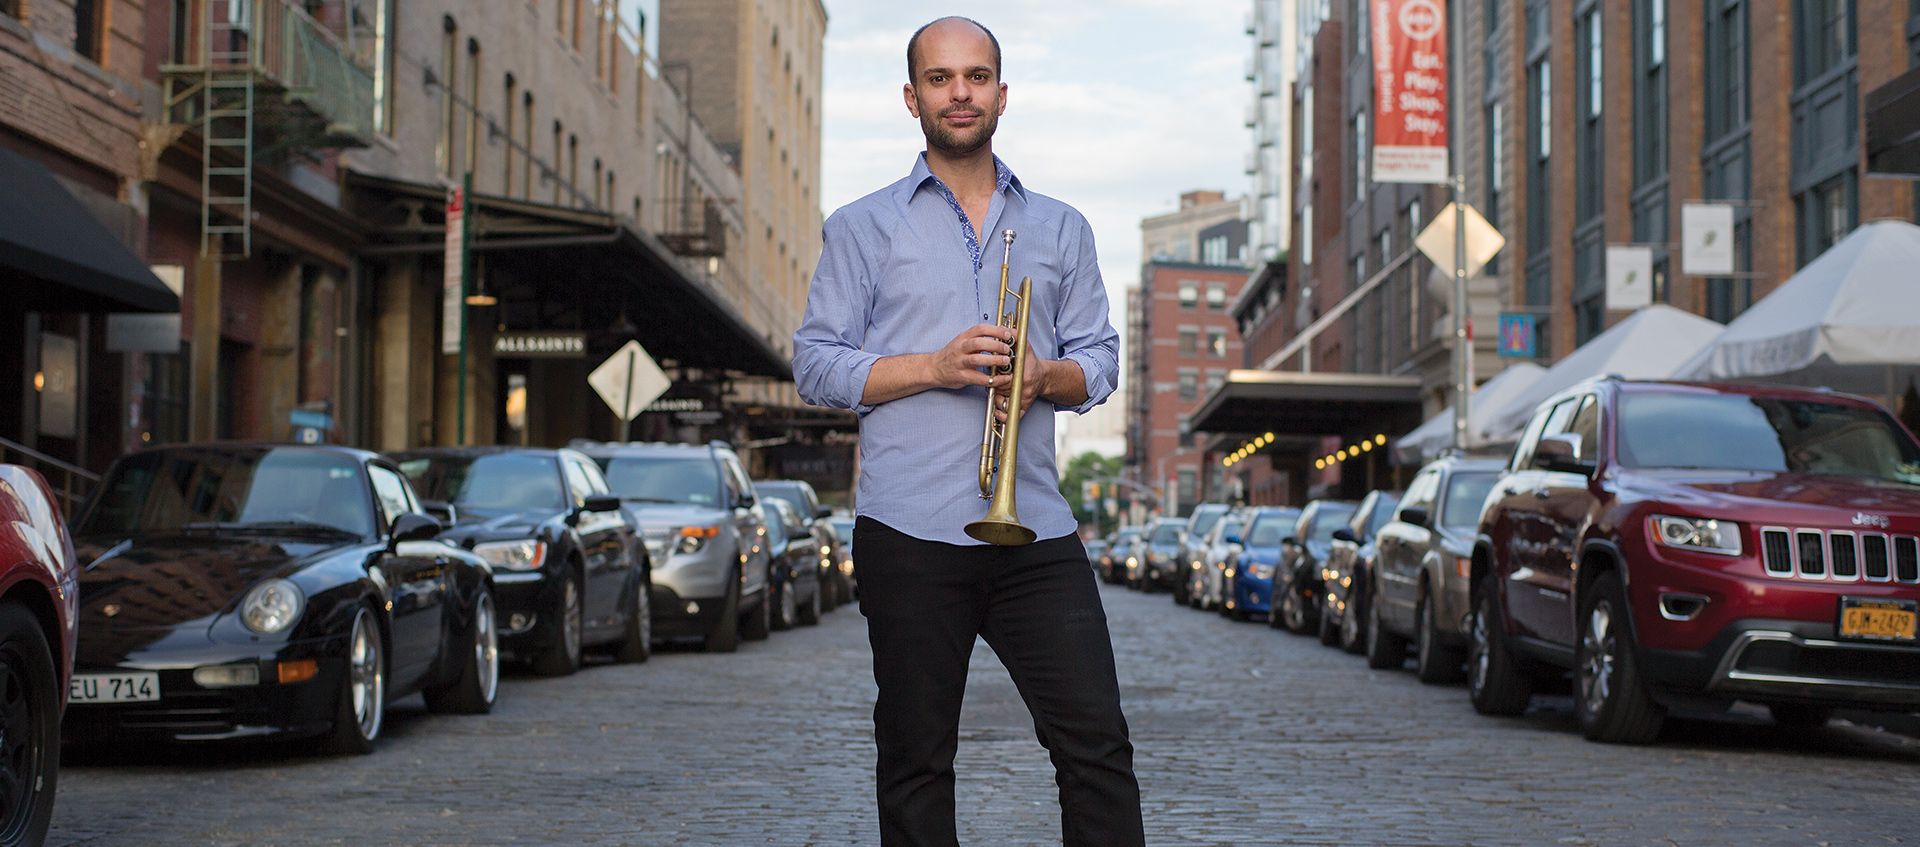 Jazz music trumpeter and composer Amir ElSaffar